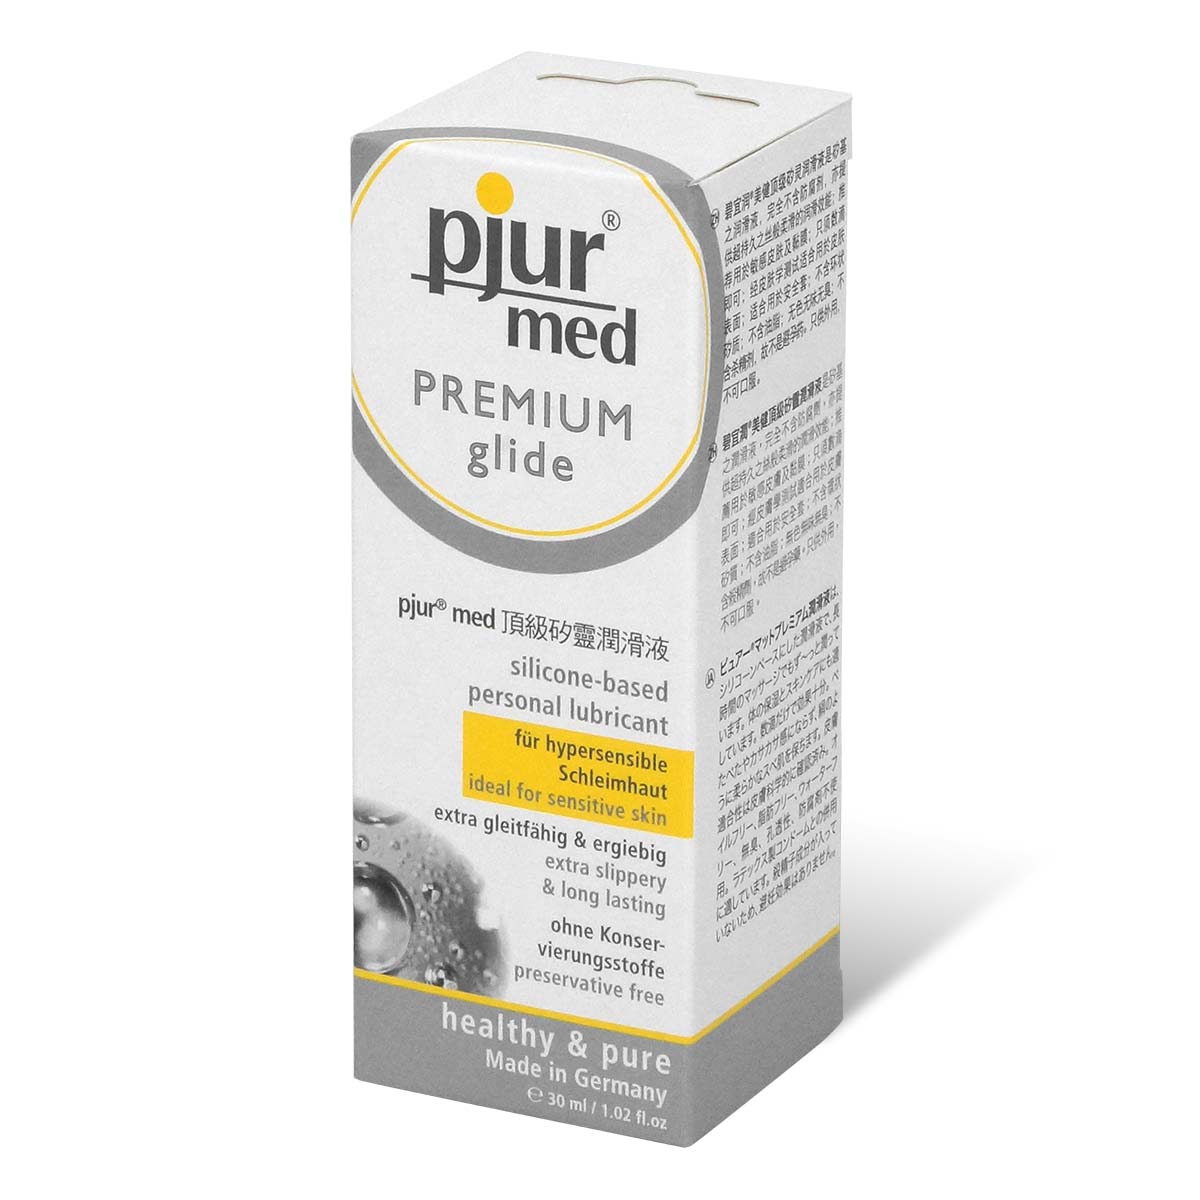 pjur med PREMIUM 頂級 30ml 矽性潤滑液 (-p_1